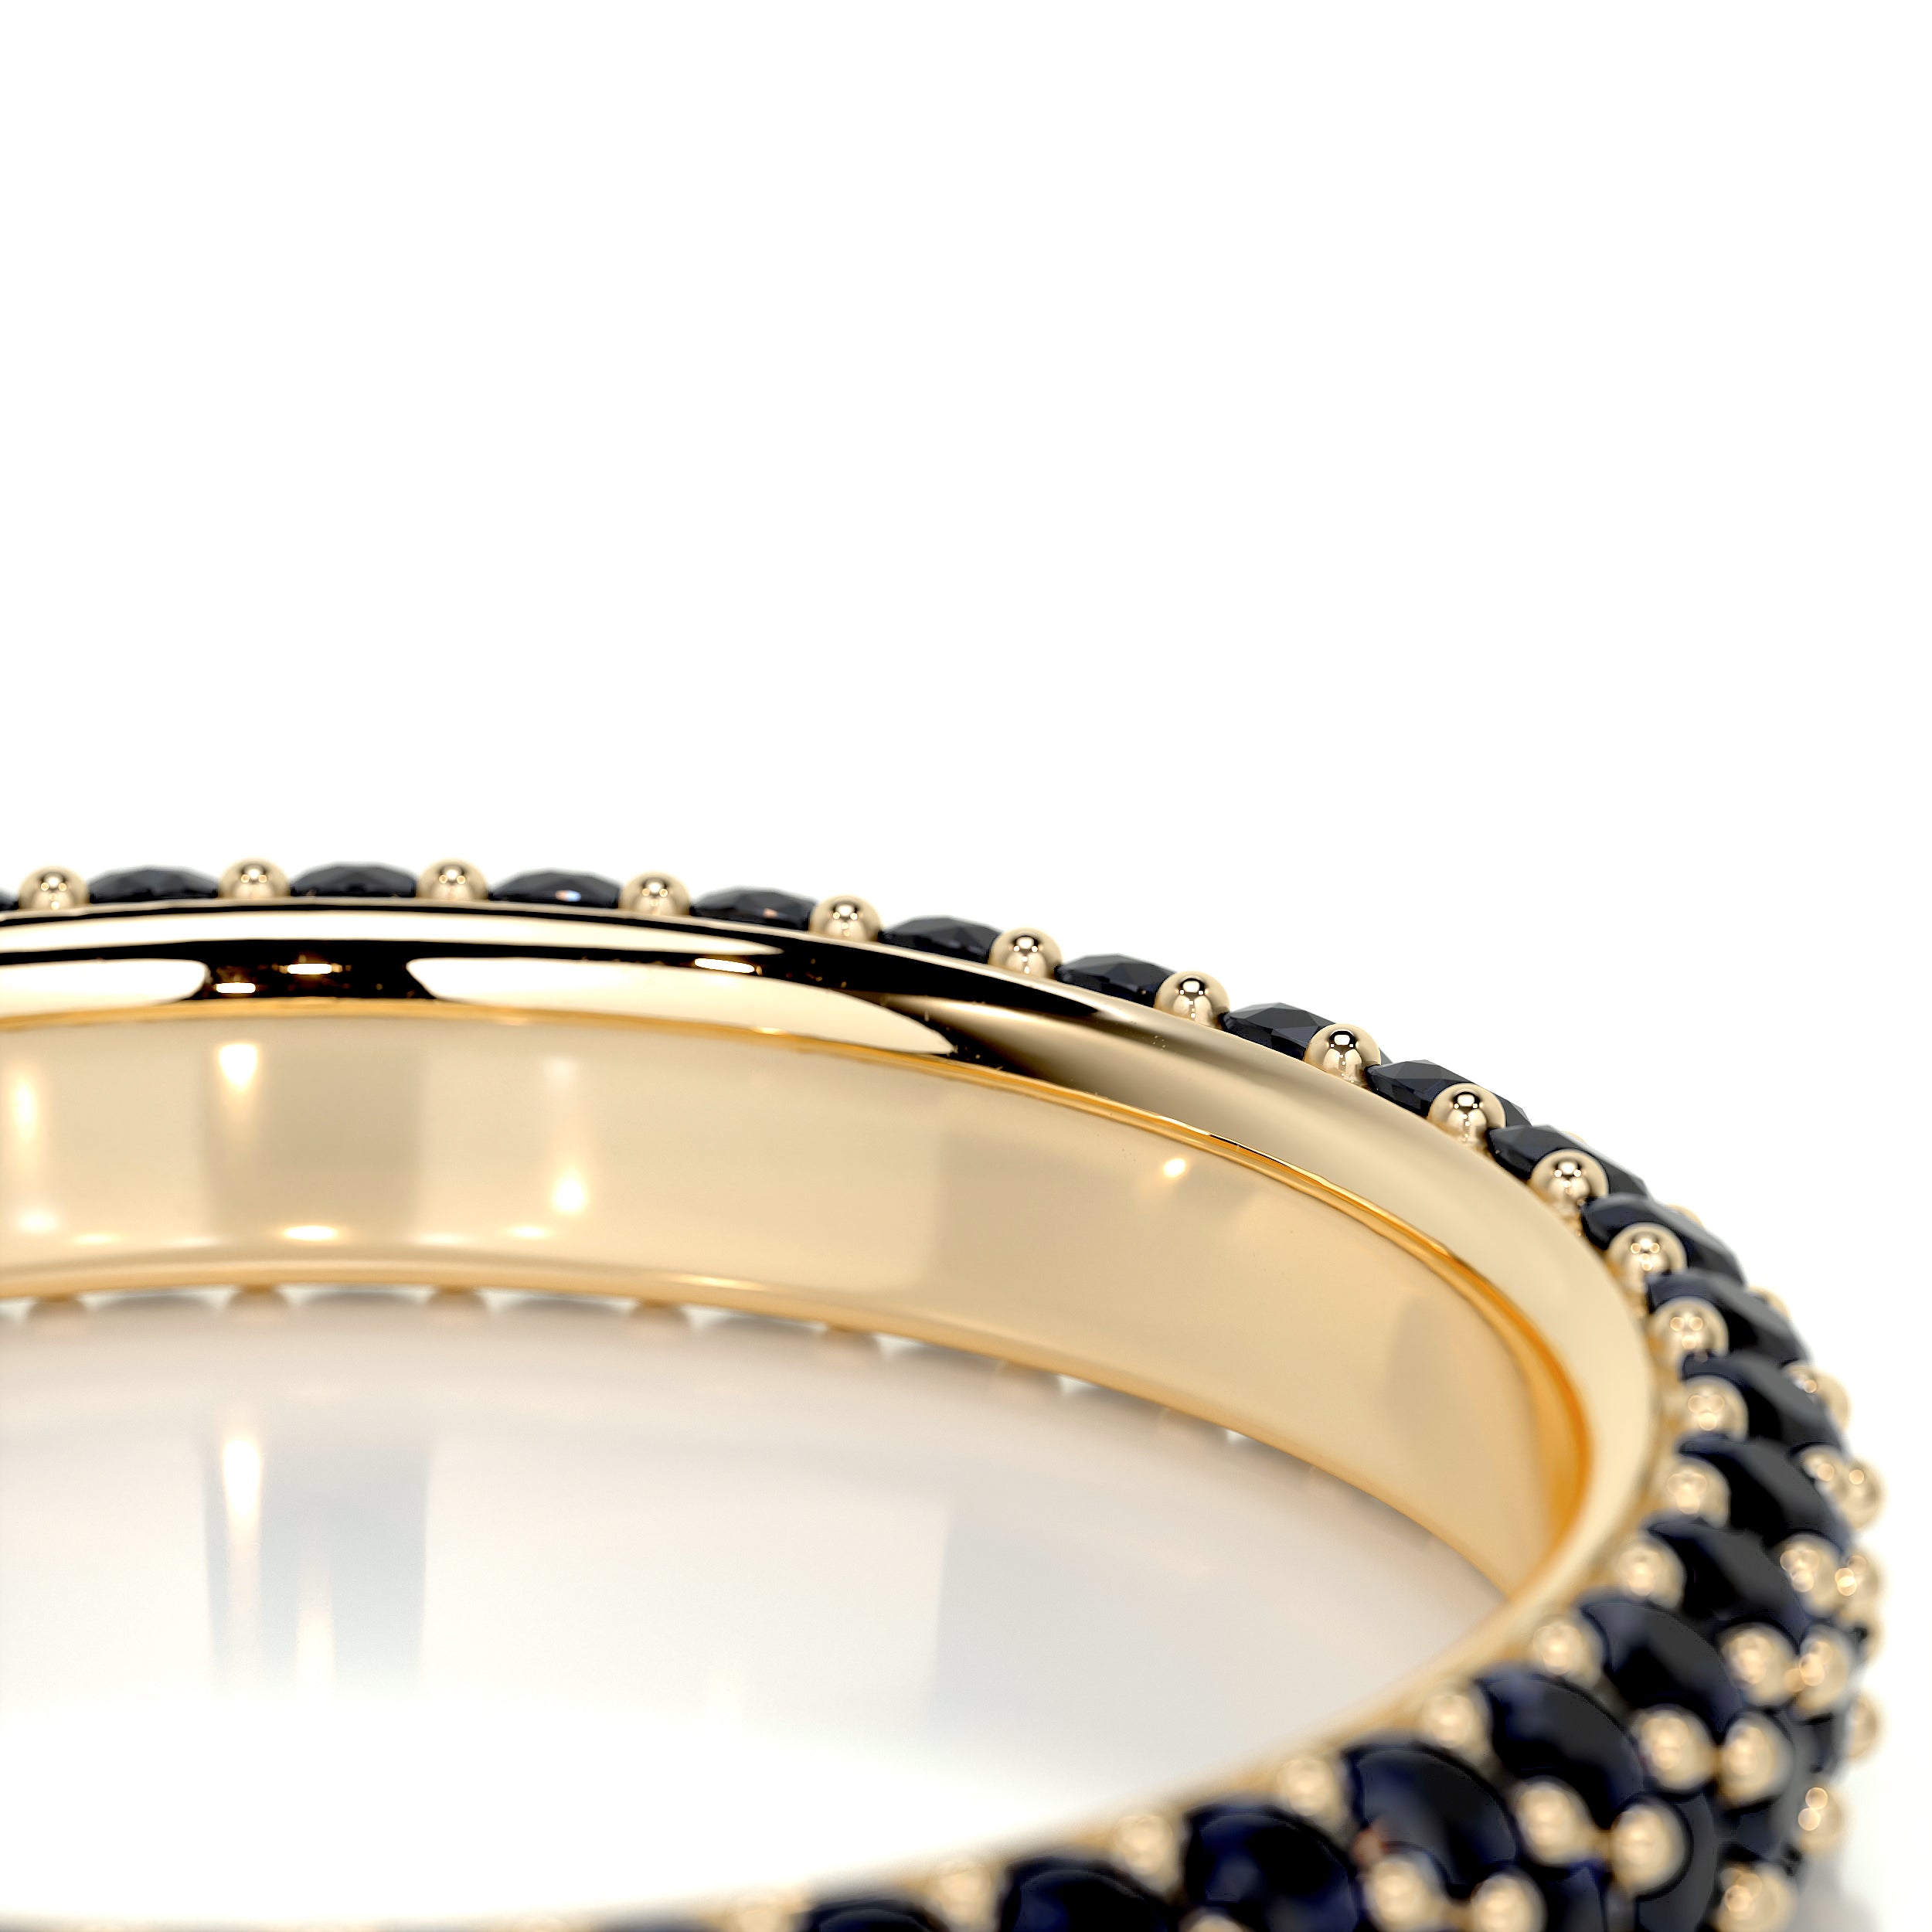 Emma Blue Gemstone Wedding Ring   (1.25 Carat) -18K Yellow Gold